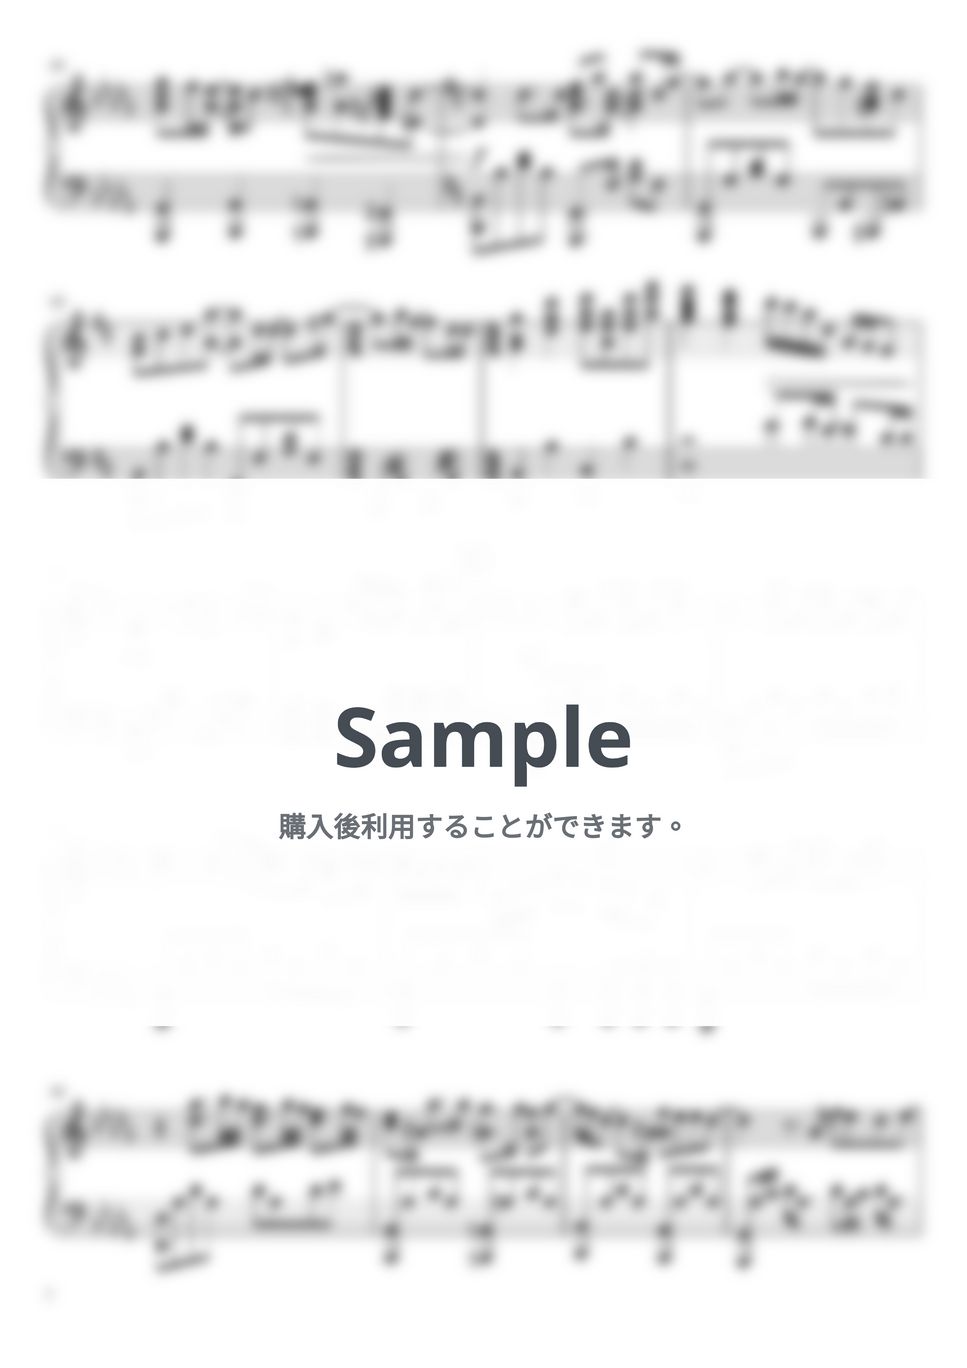 Mrs. GREEN APPLE - ナハトムジーク (ピアノソロ / 中級～上級) by SuperMomoFactory